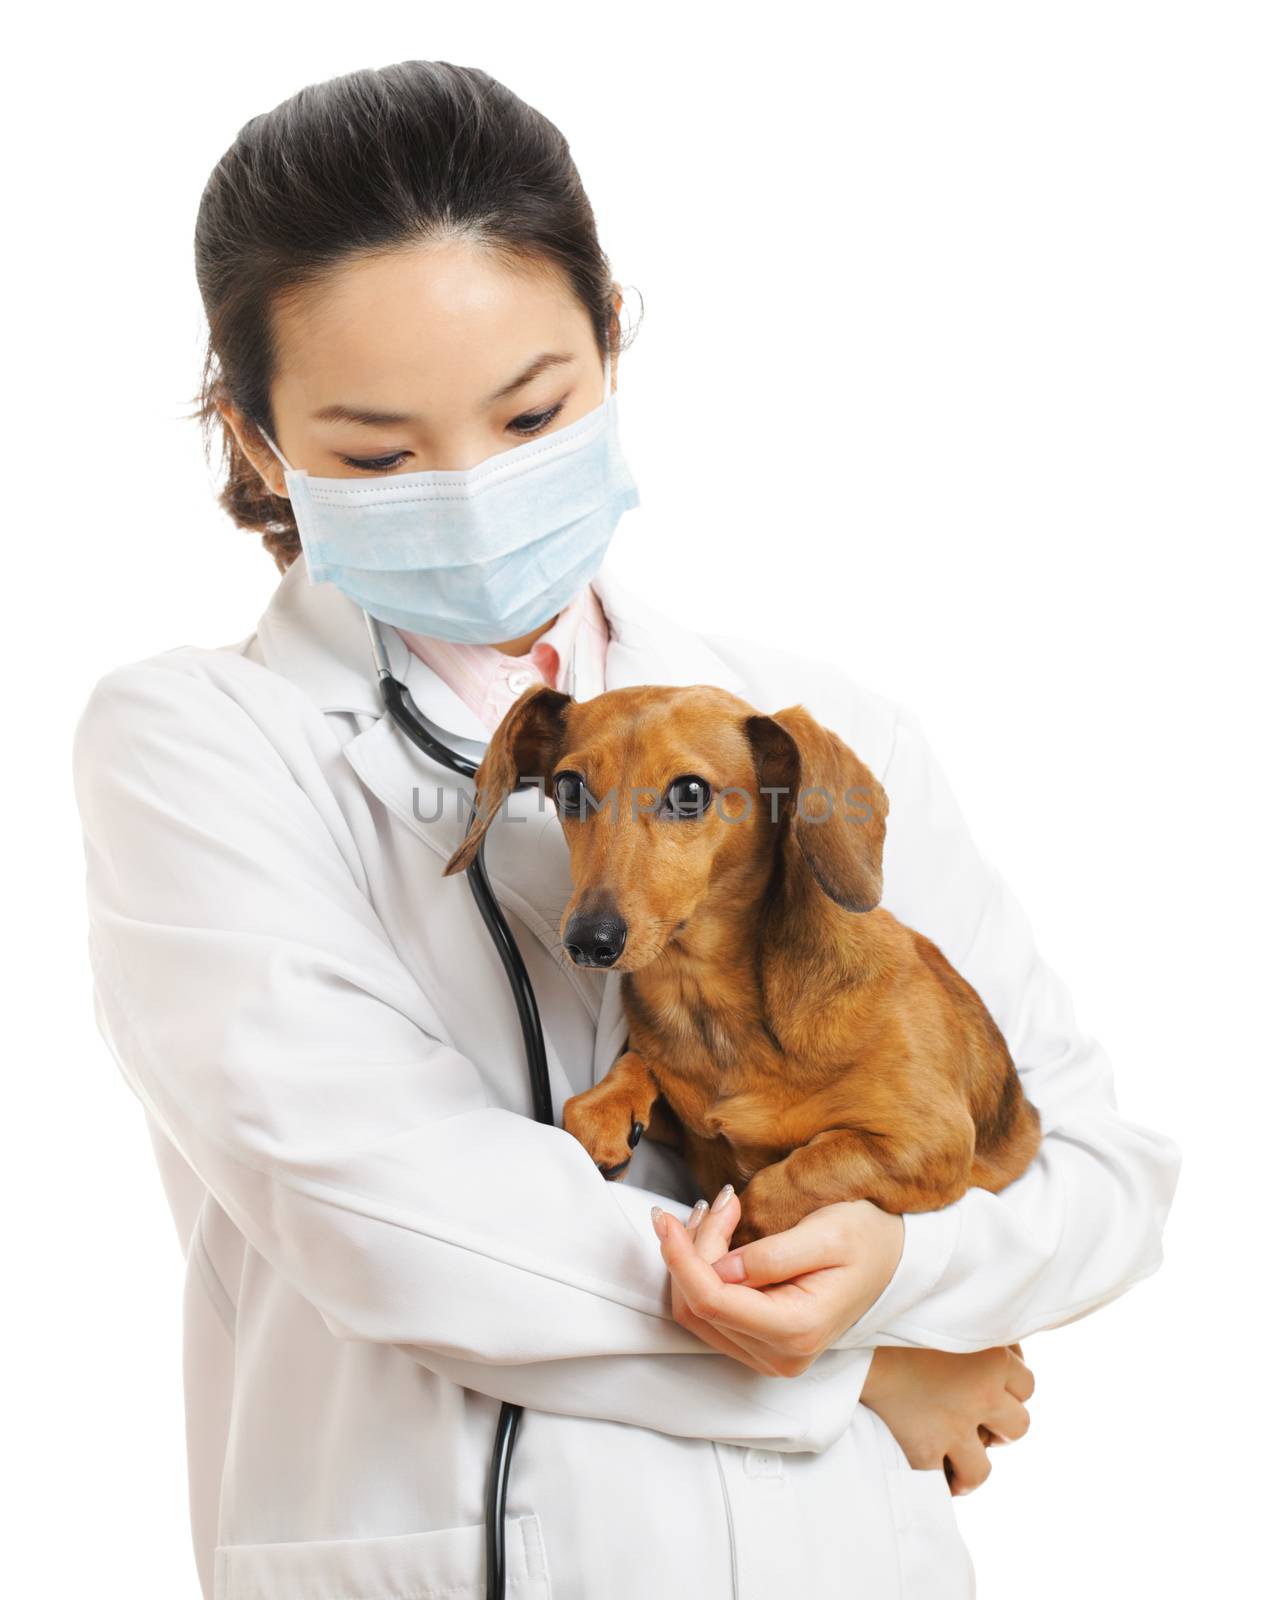 Veterinarian with dachshund dog